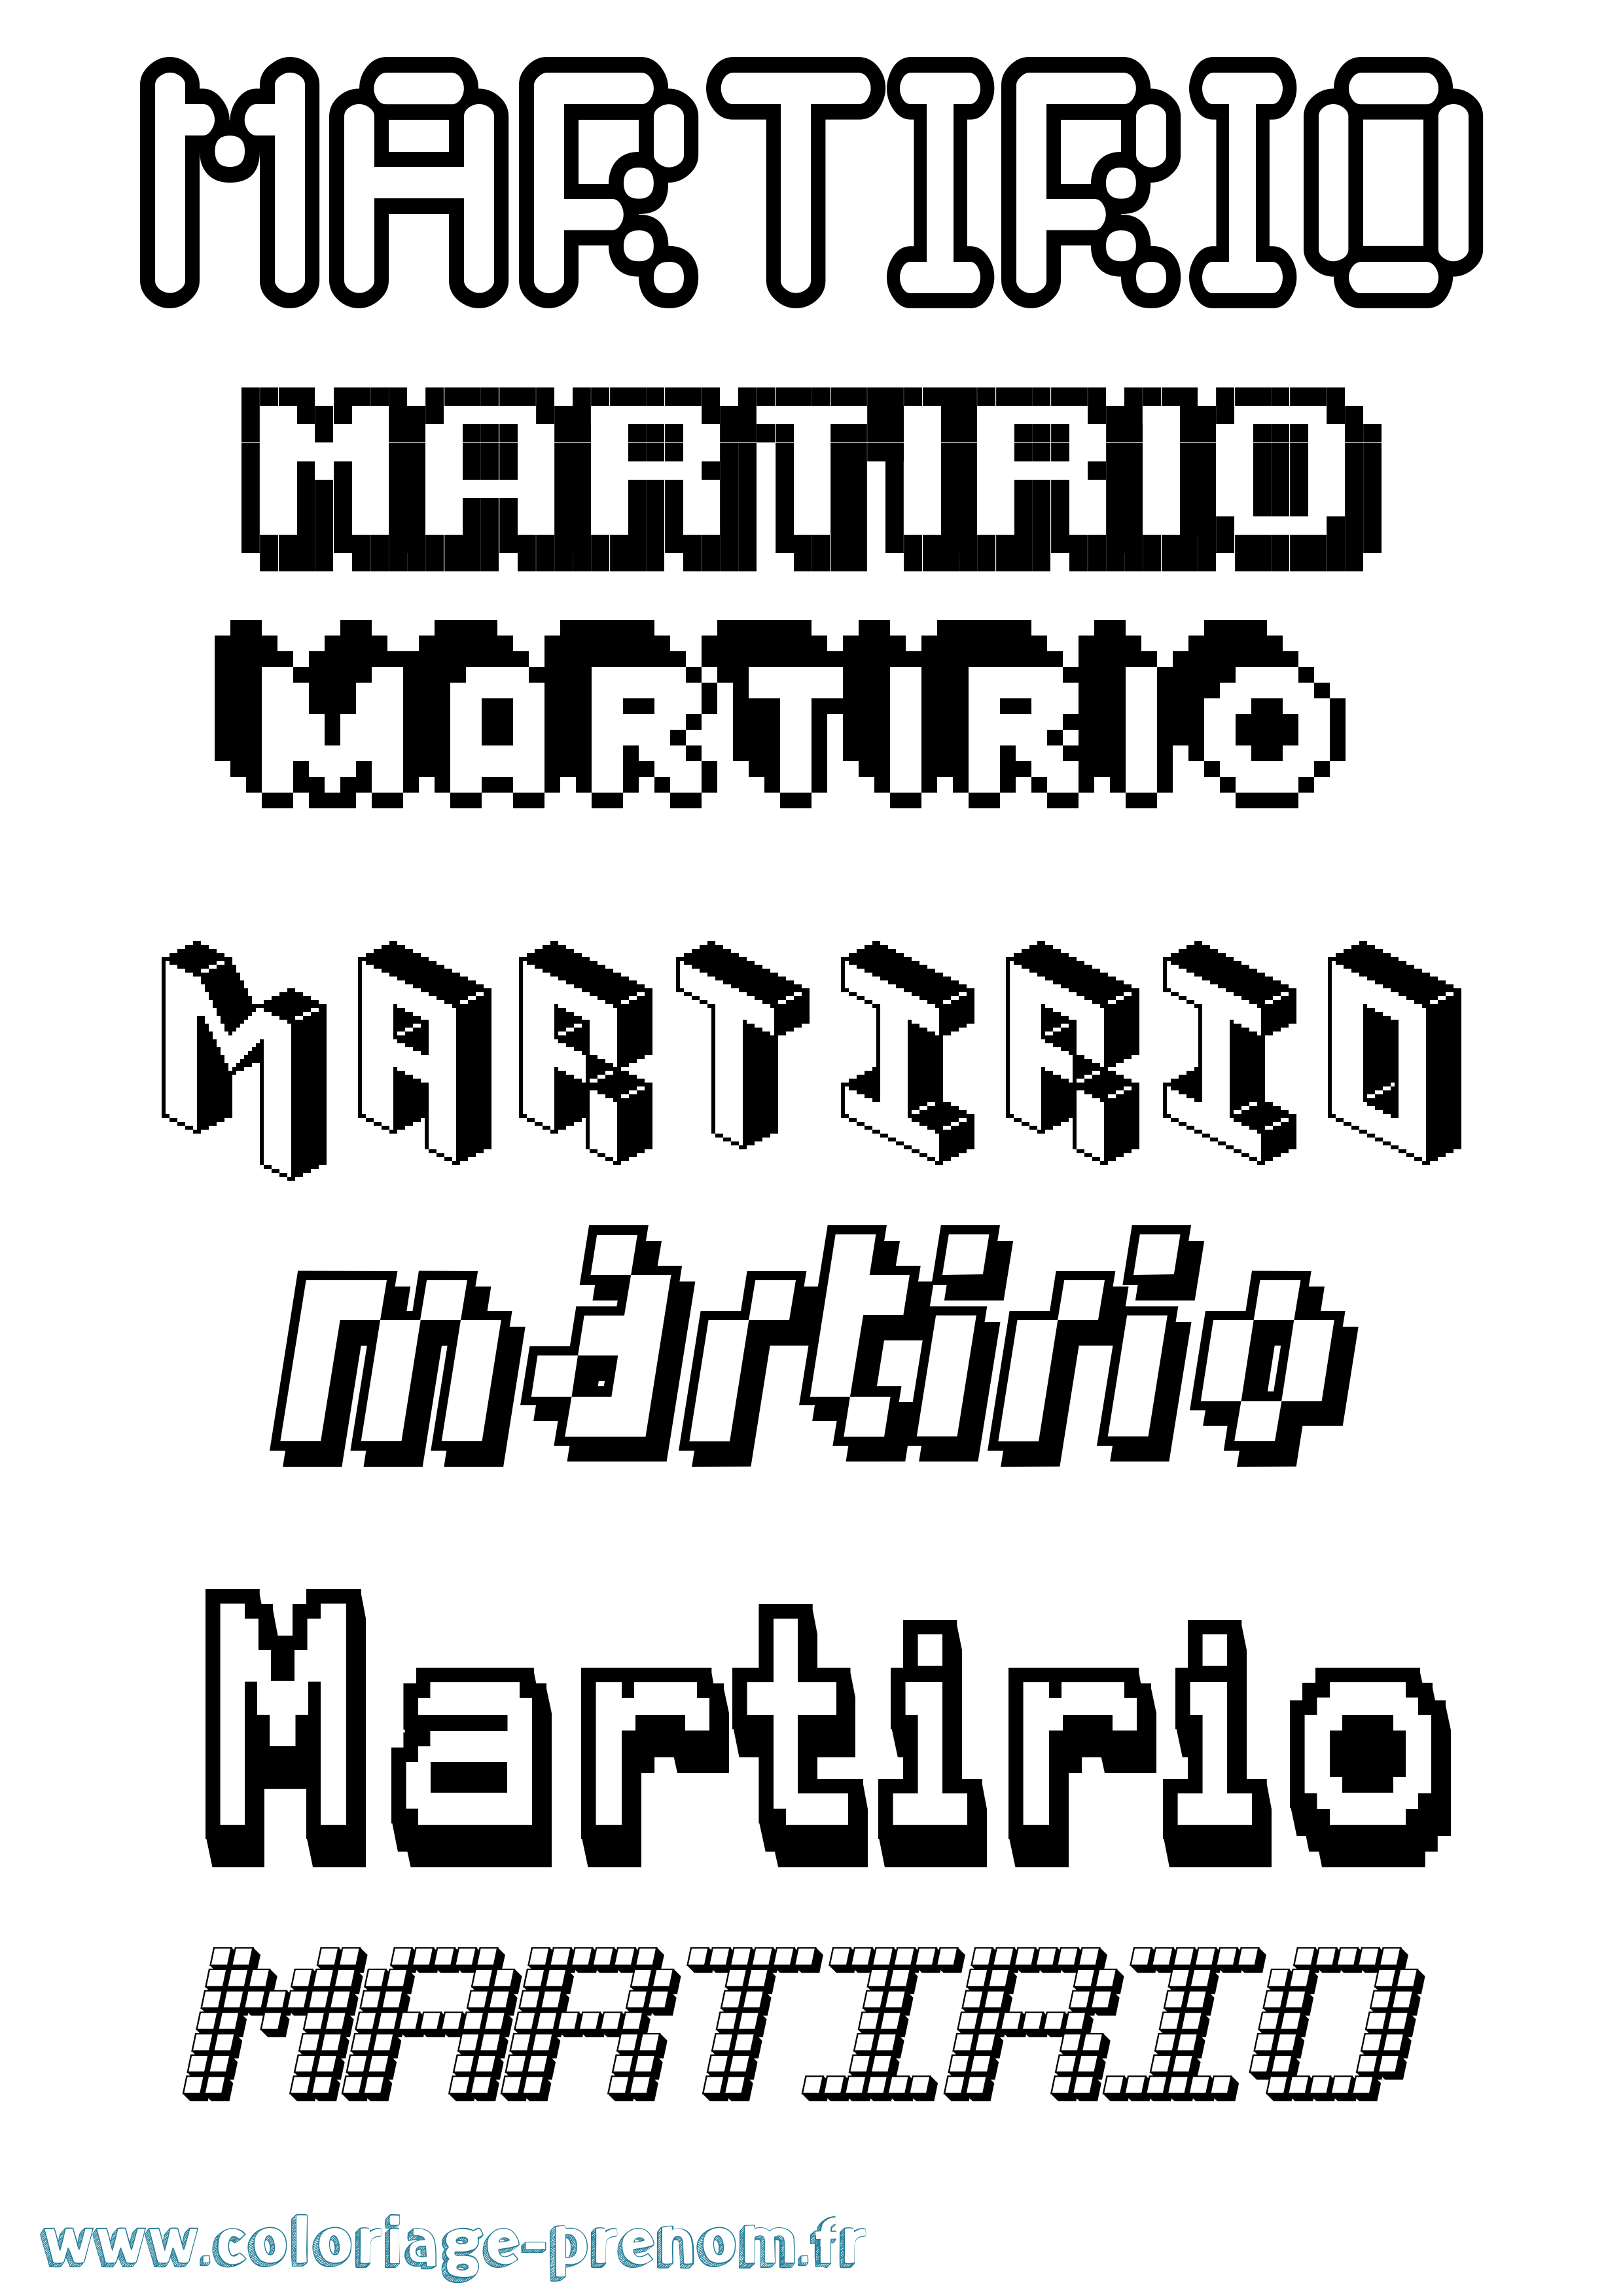 Coloriage prénom Martirio Pixel